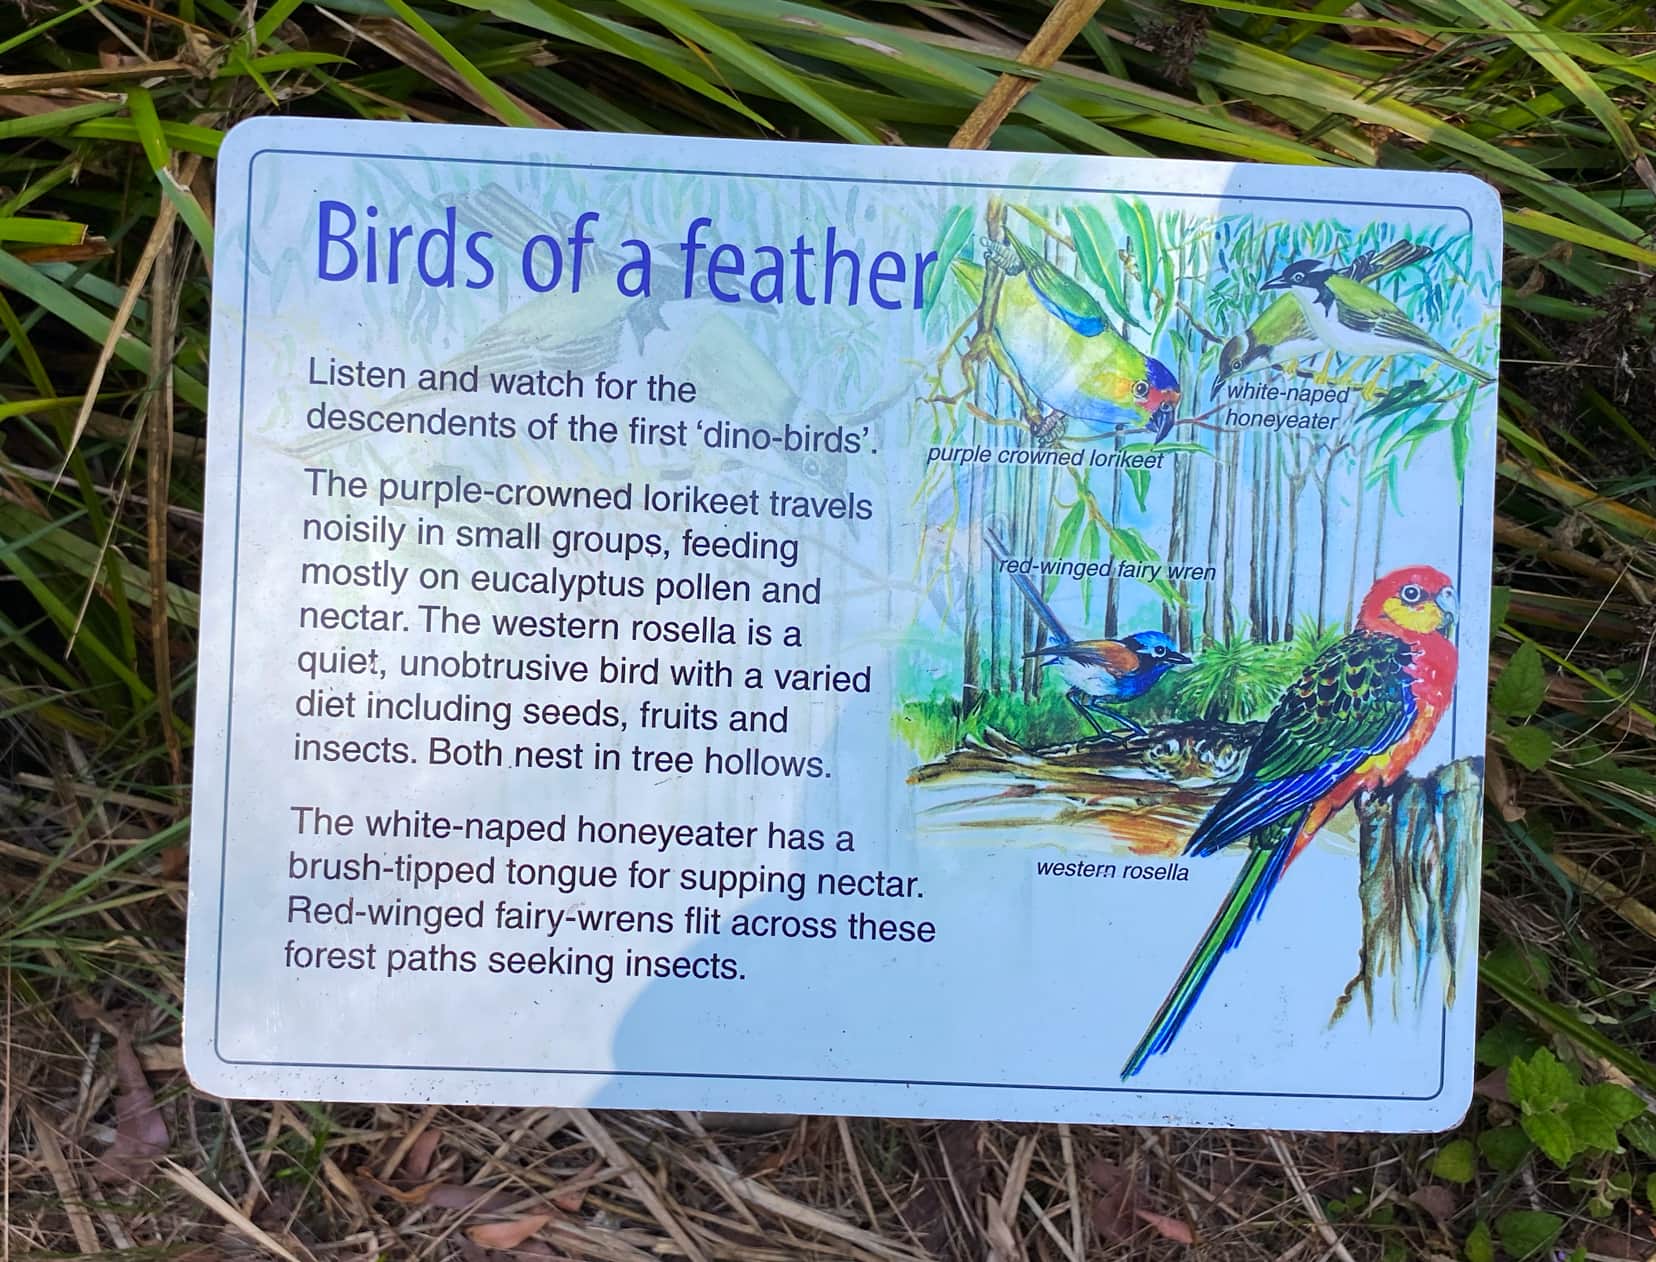 Giant-Tingle-Birds-sign along the path 